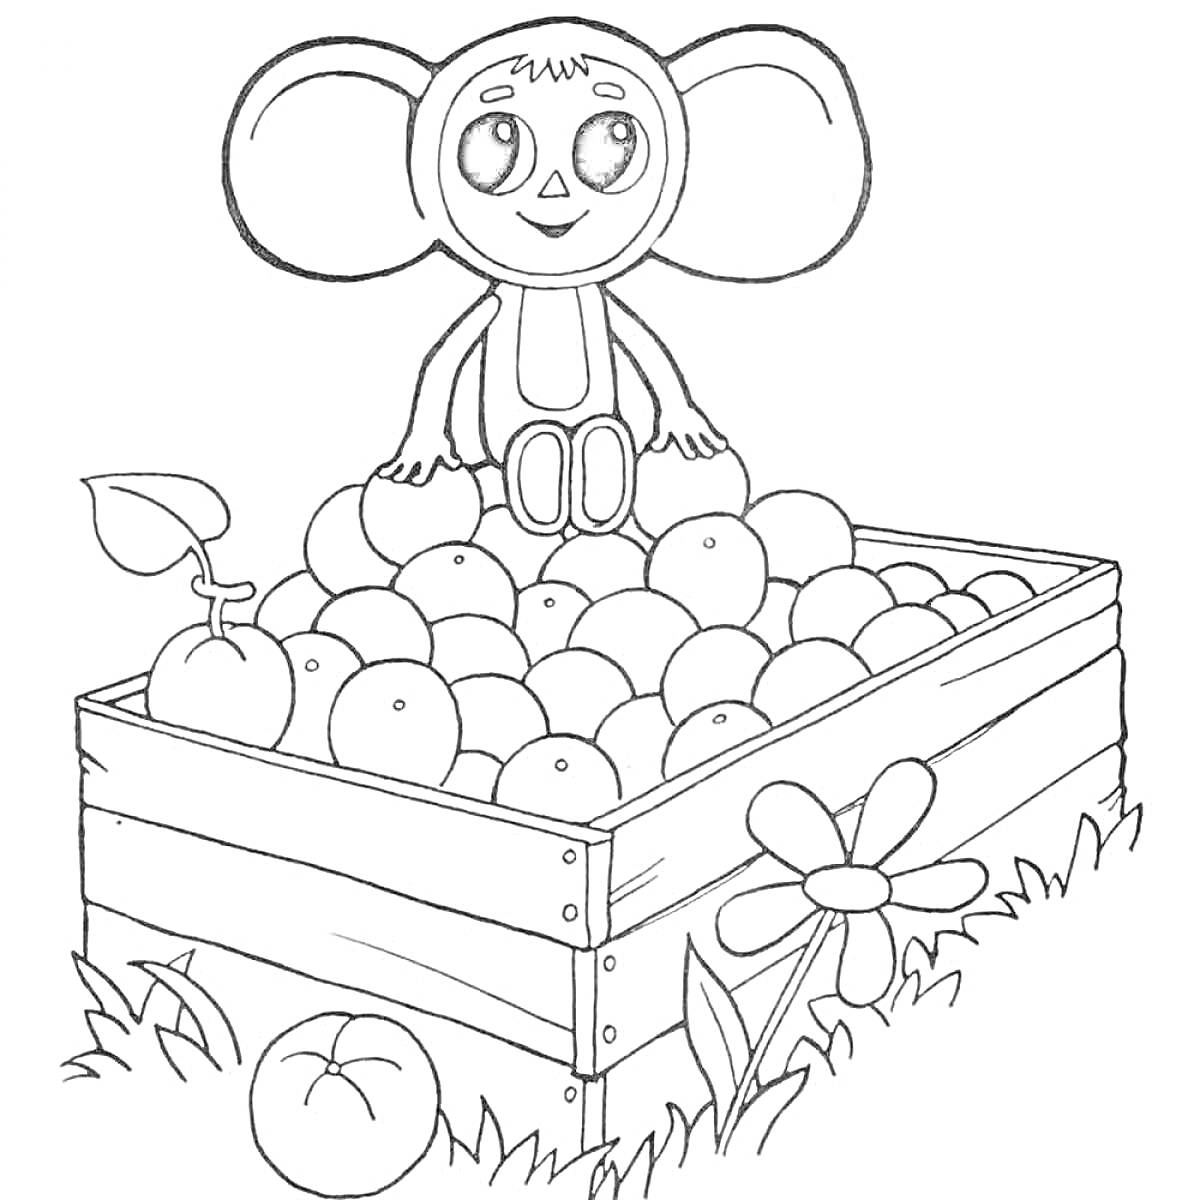 Раскраска Чебурашка сидит на ящике с апельсинами, цветок, трава, яблоко на земле